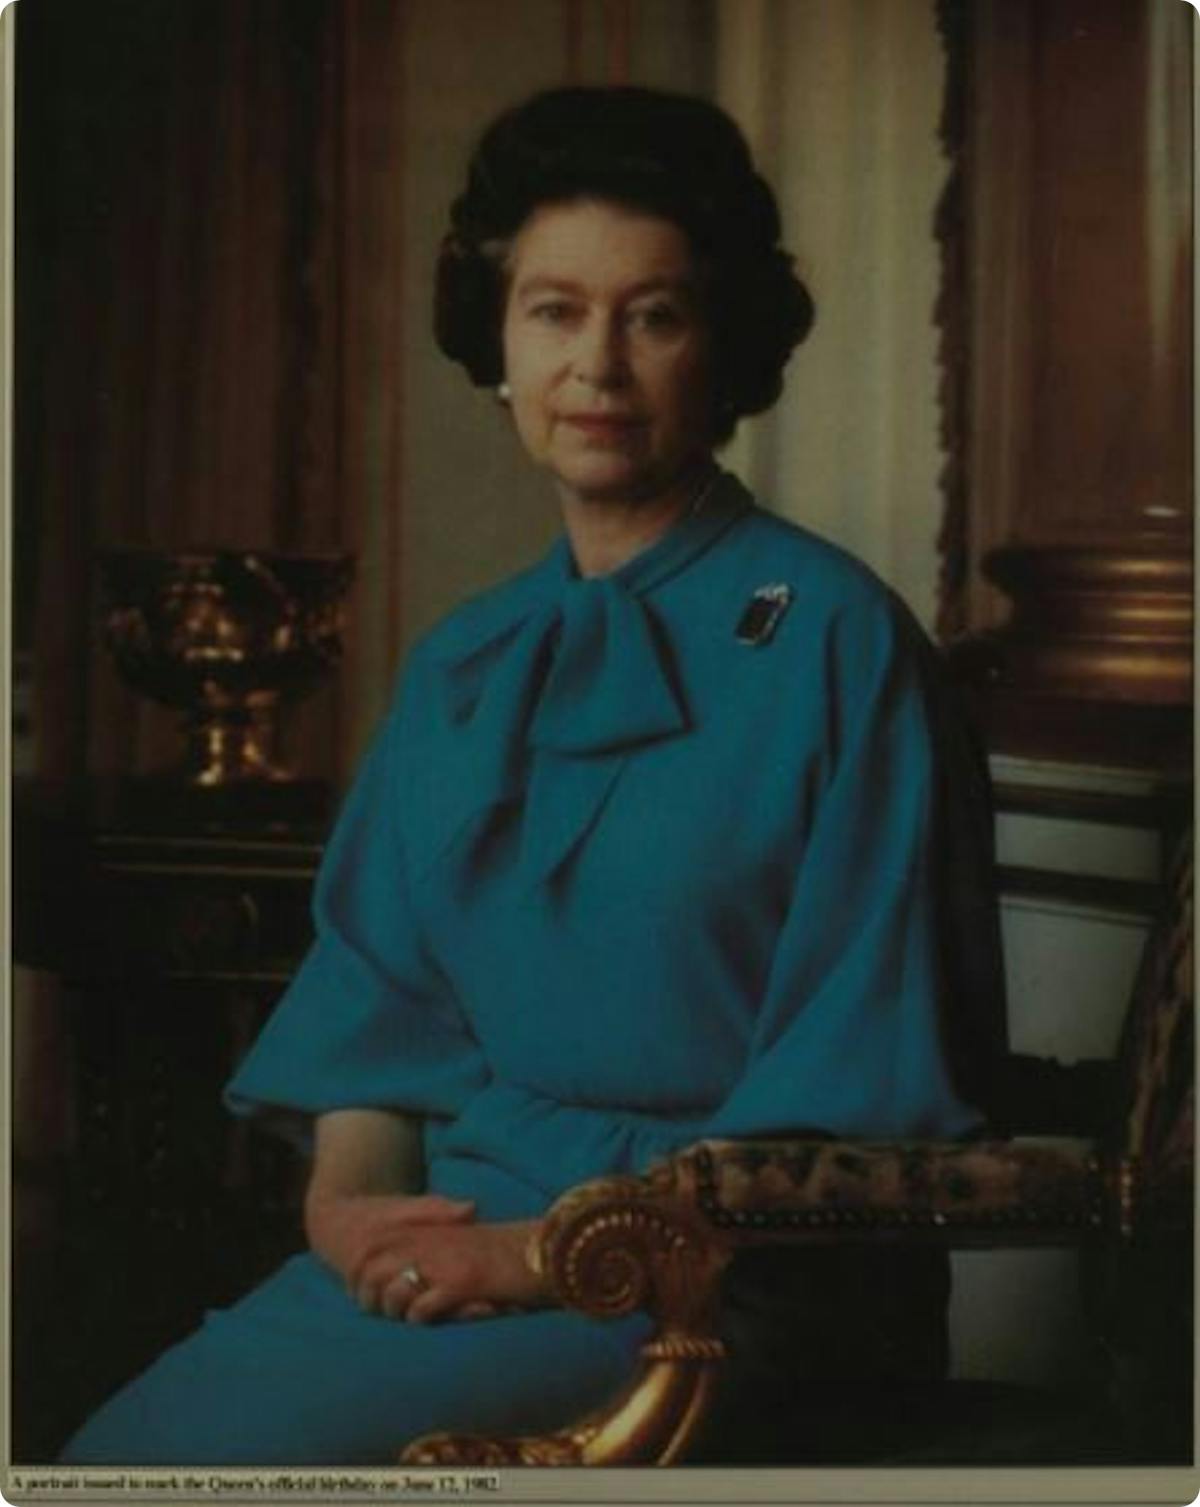 The Queen's birthday portrait, 1982